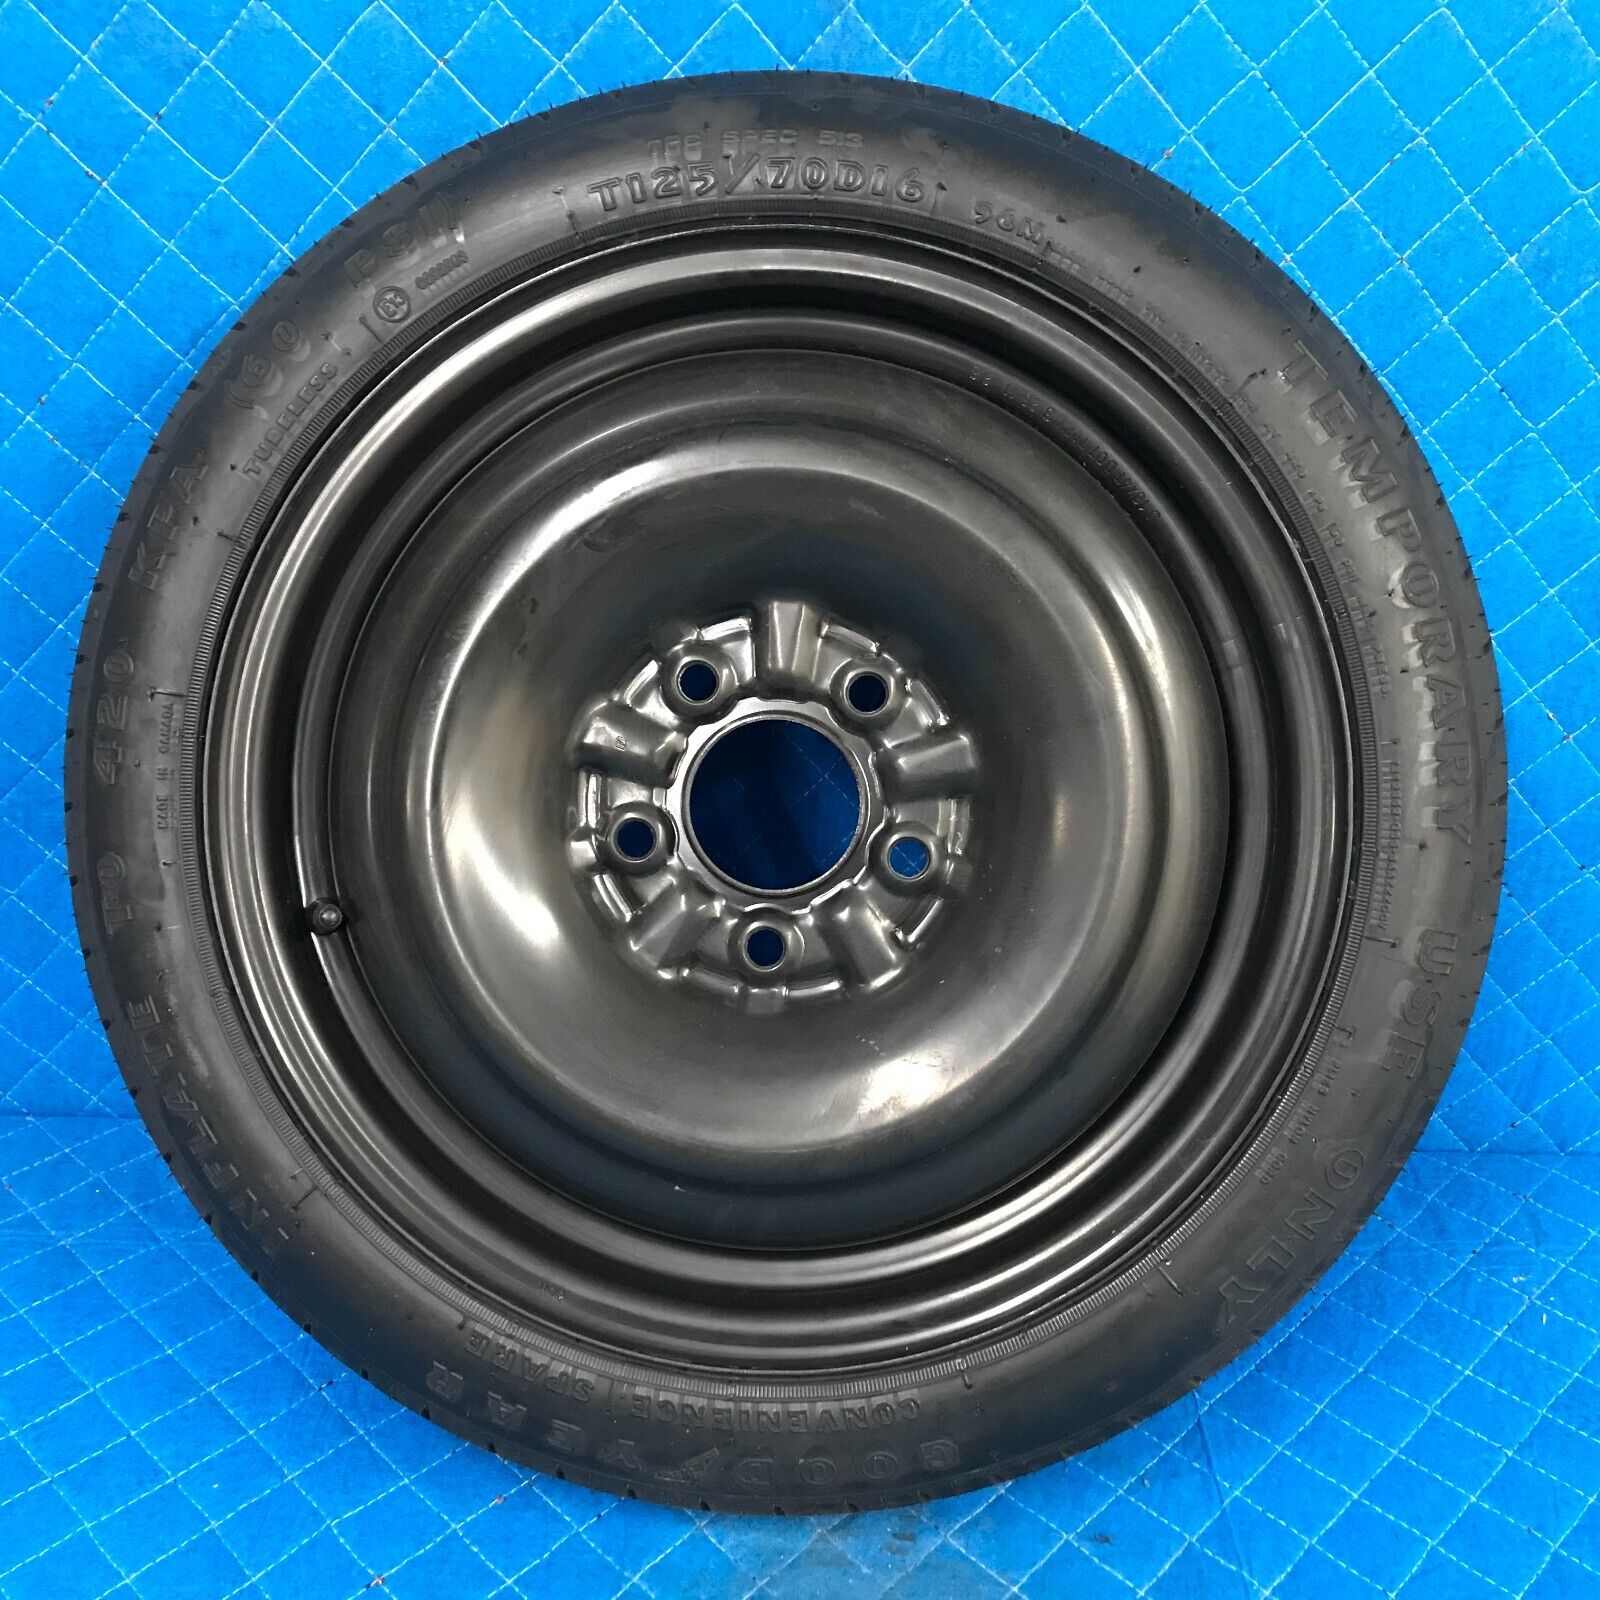 02-12 Mitsubishi Galant Eclipse Spare Tire Donut Compact Wheel Rim 125/70D16 OEM